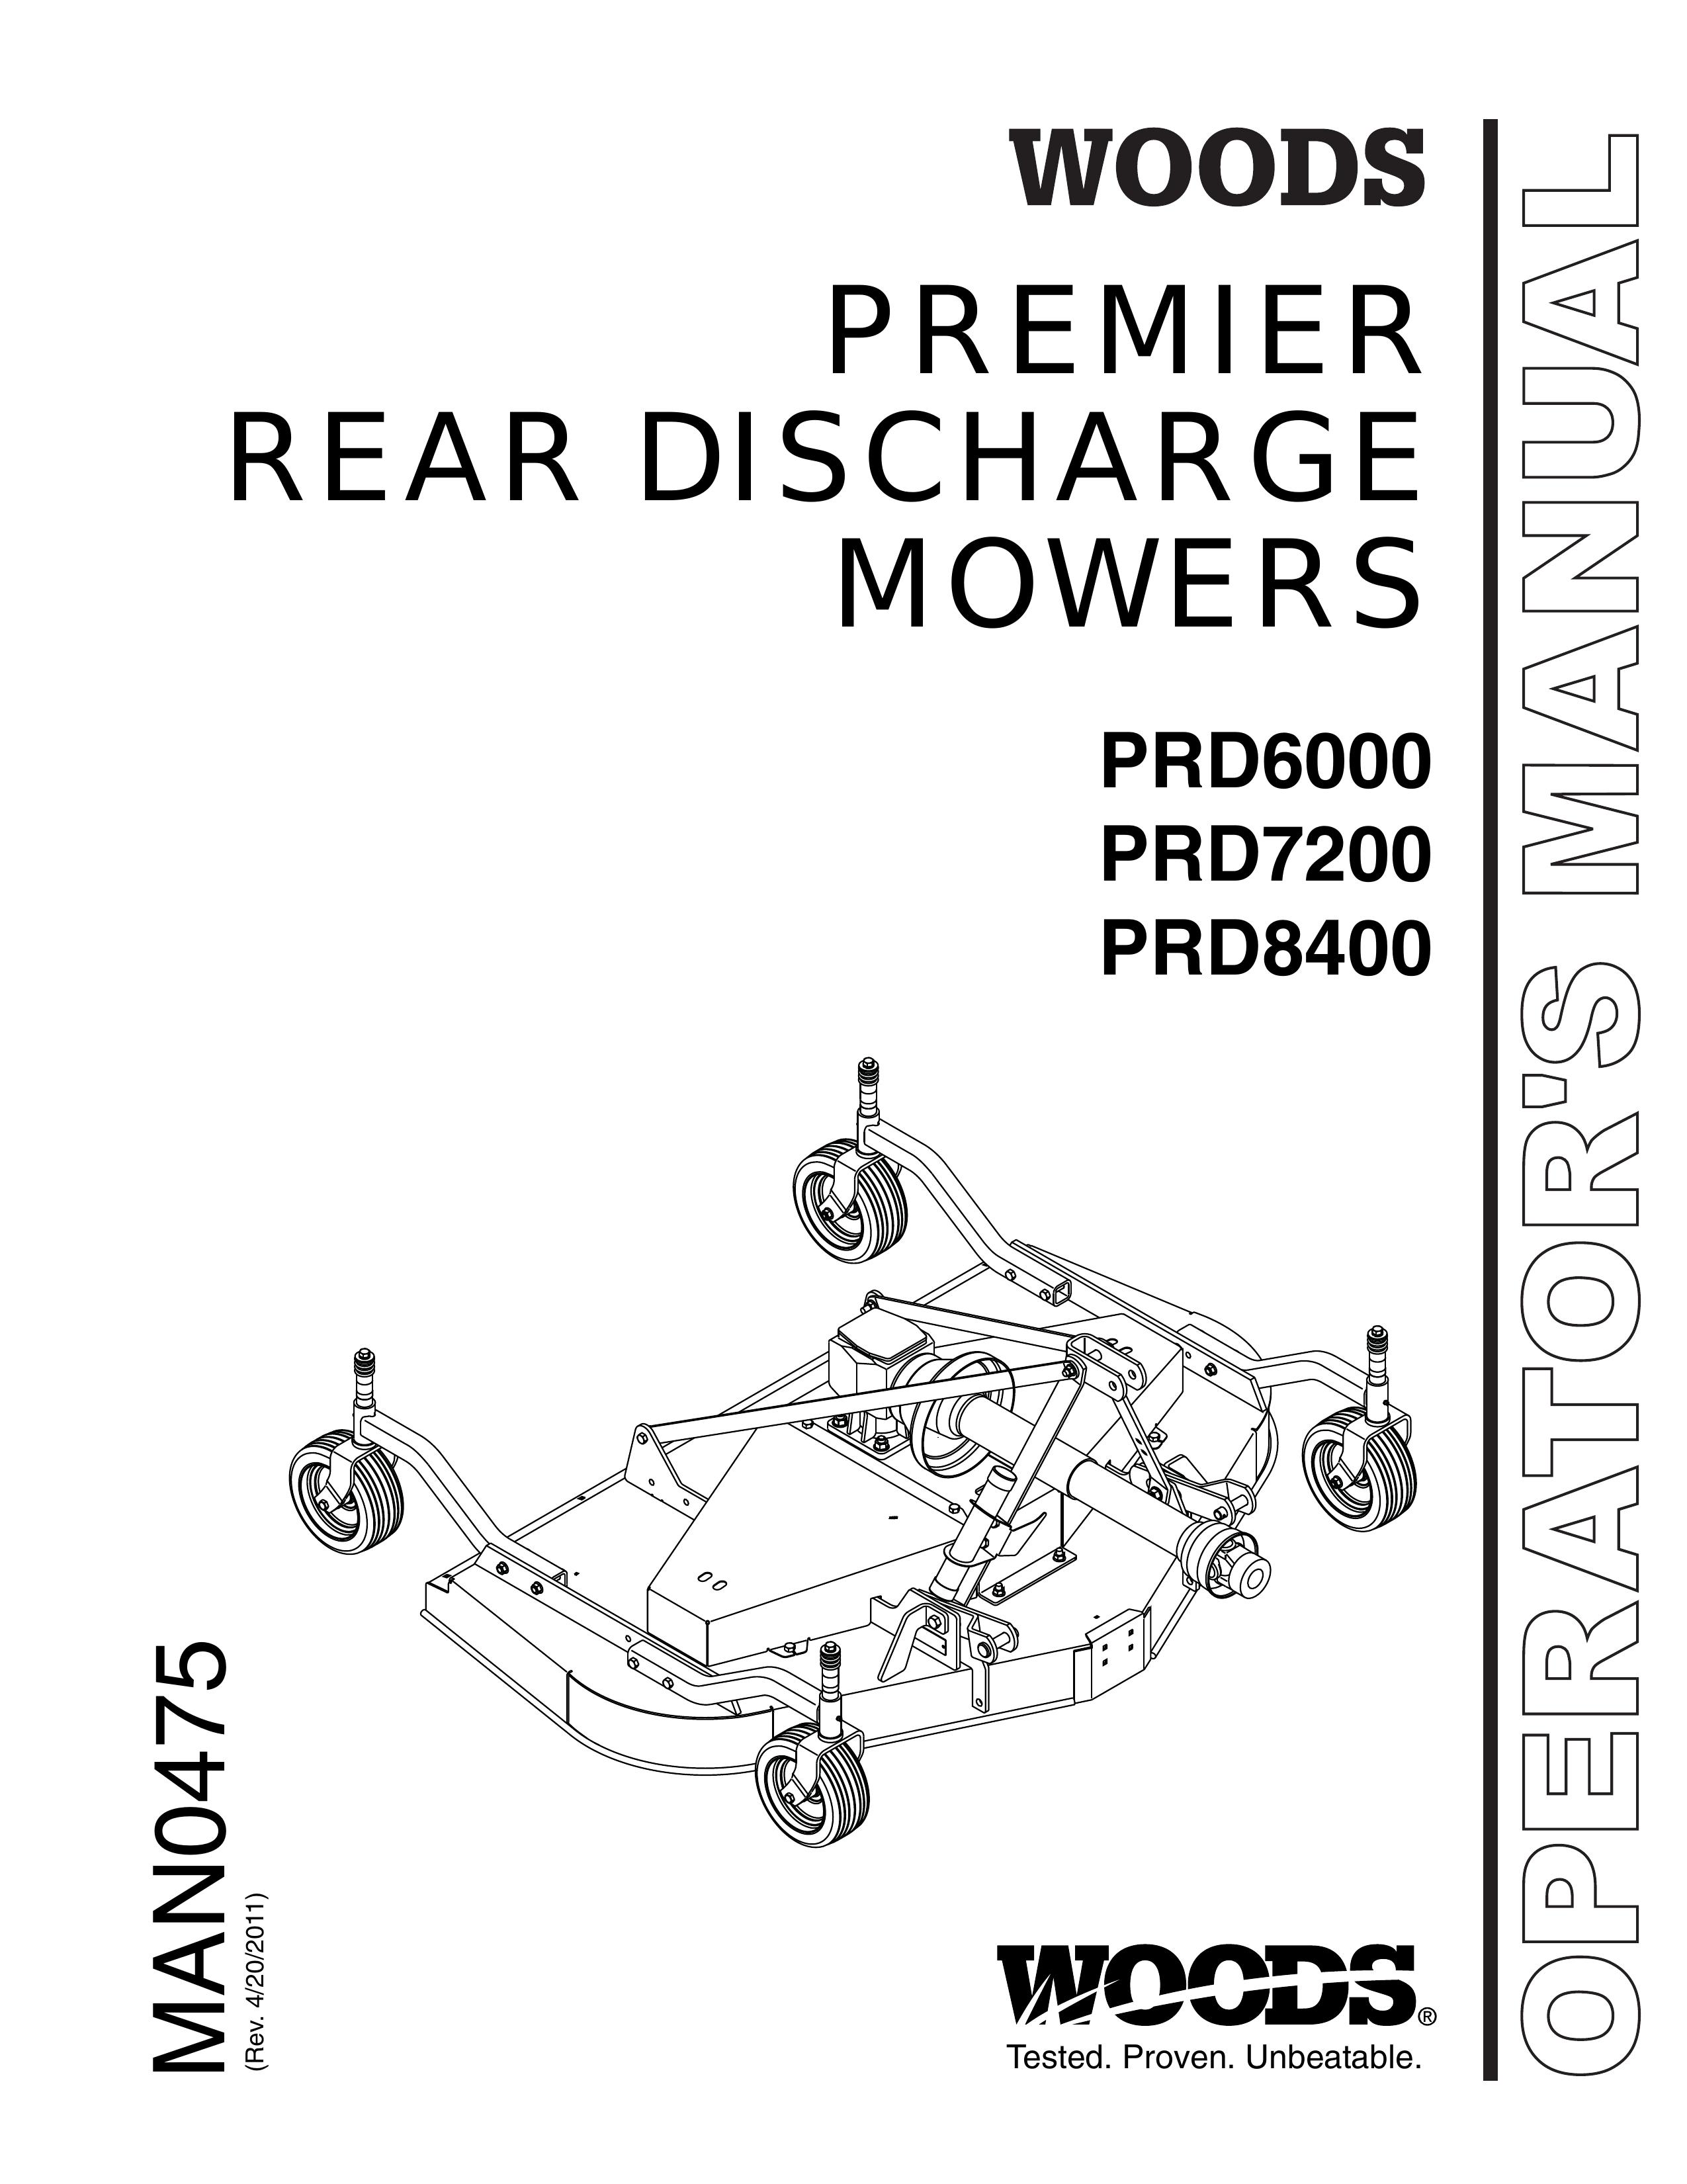 Woods Equipment PRD8400 Lawn Mower User Manual